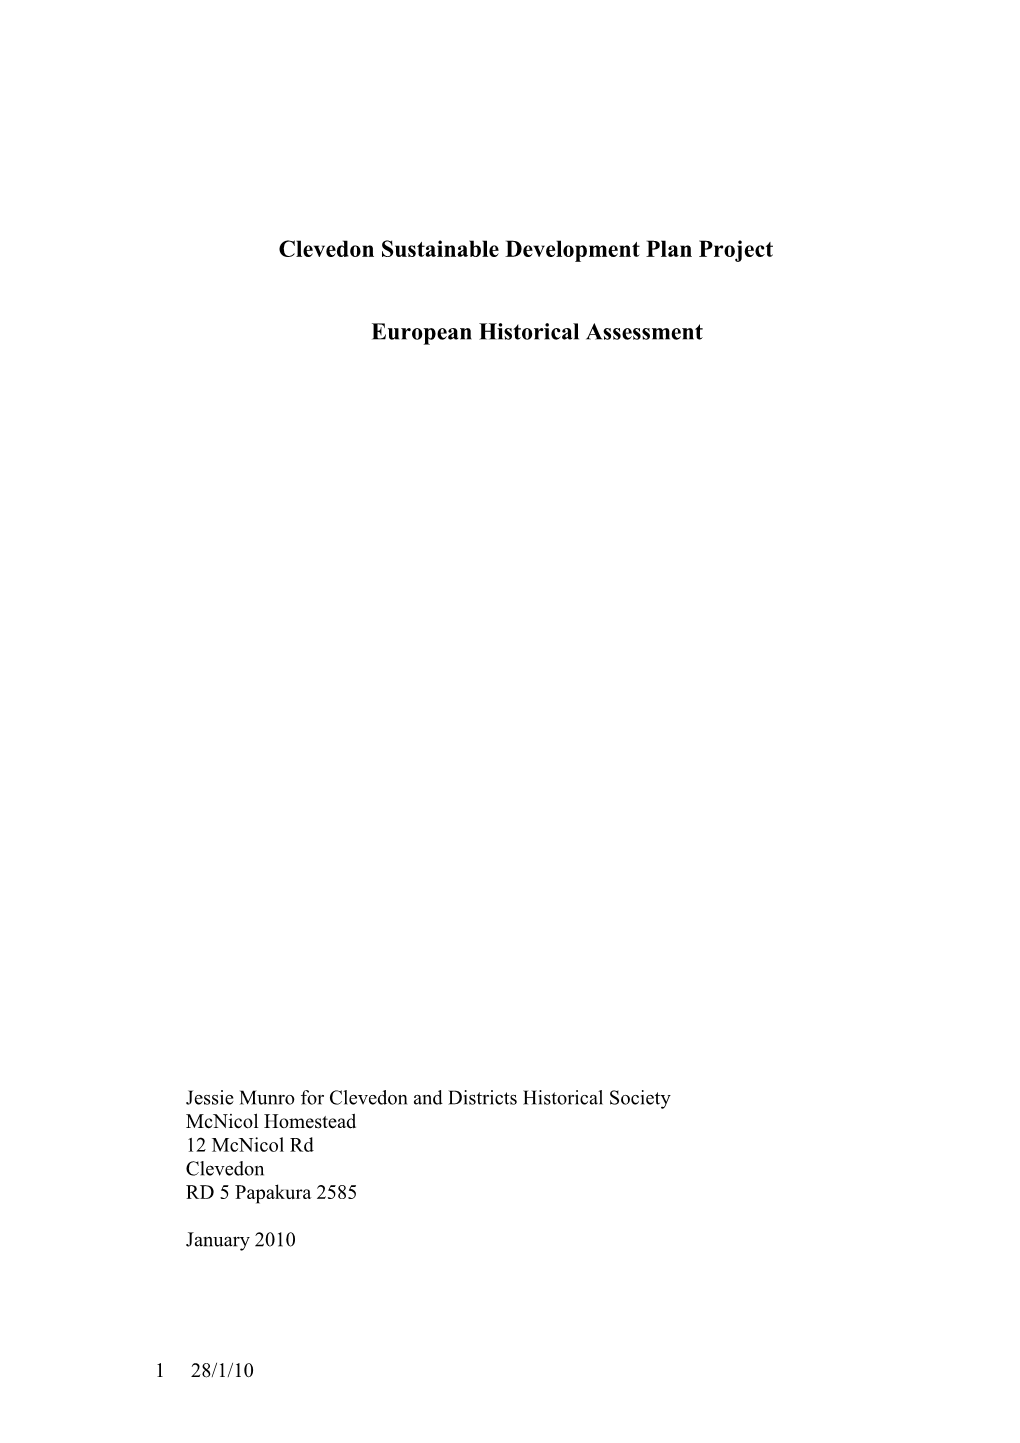 Clevedon Sustainable Development Plan Project European Historical